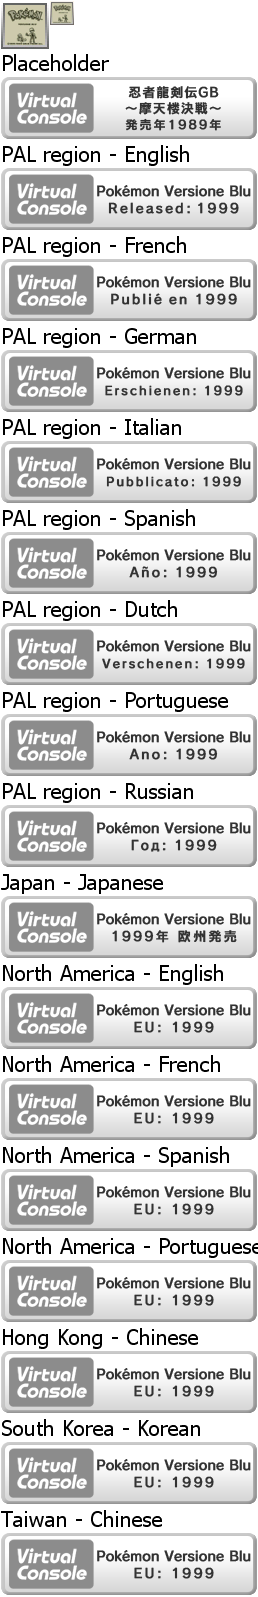 Virtual Console - Pokémon Versione Blu